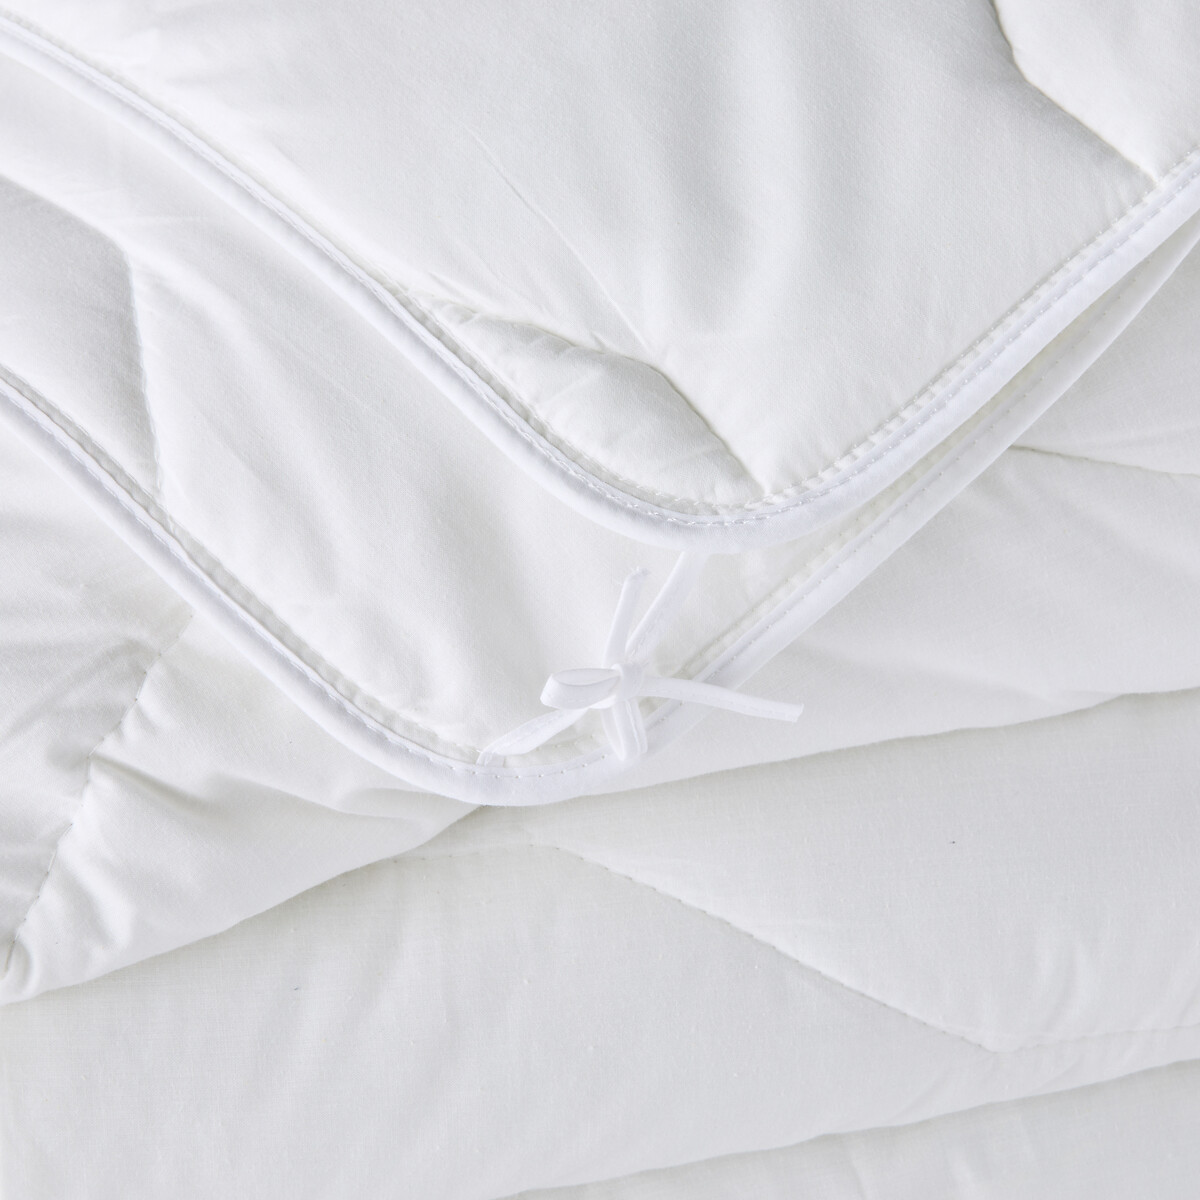 Одеяло La Redoute Двойное Pratique  сезона  полиэстер 240 x 220 см белый, размер 240 x 220 см - фото 3